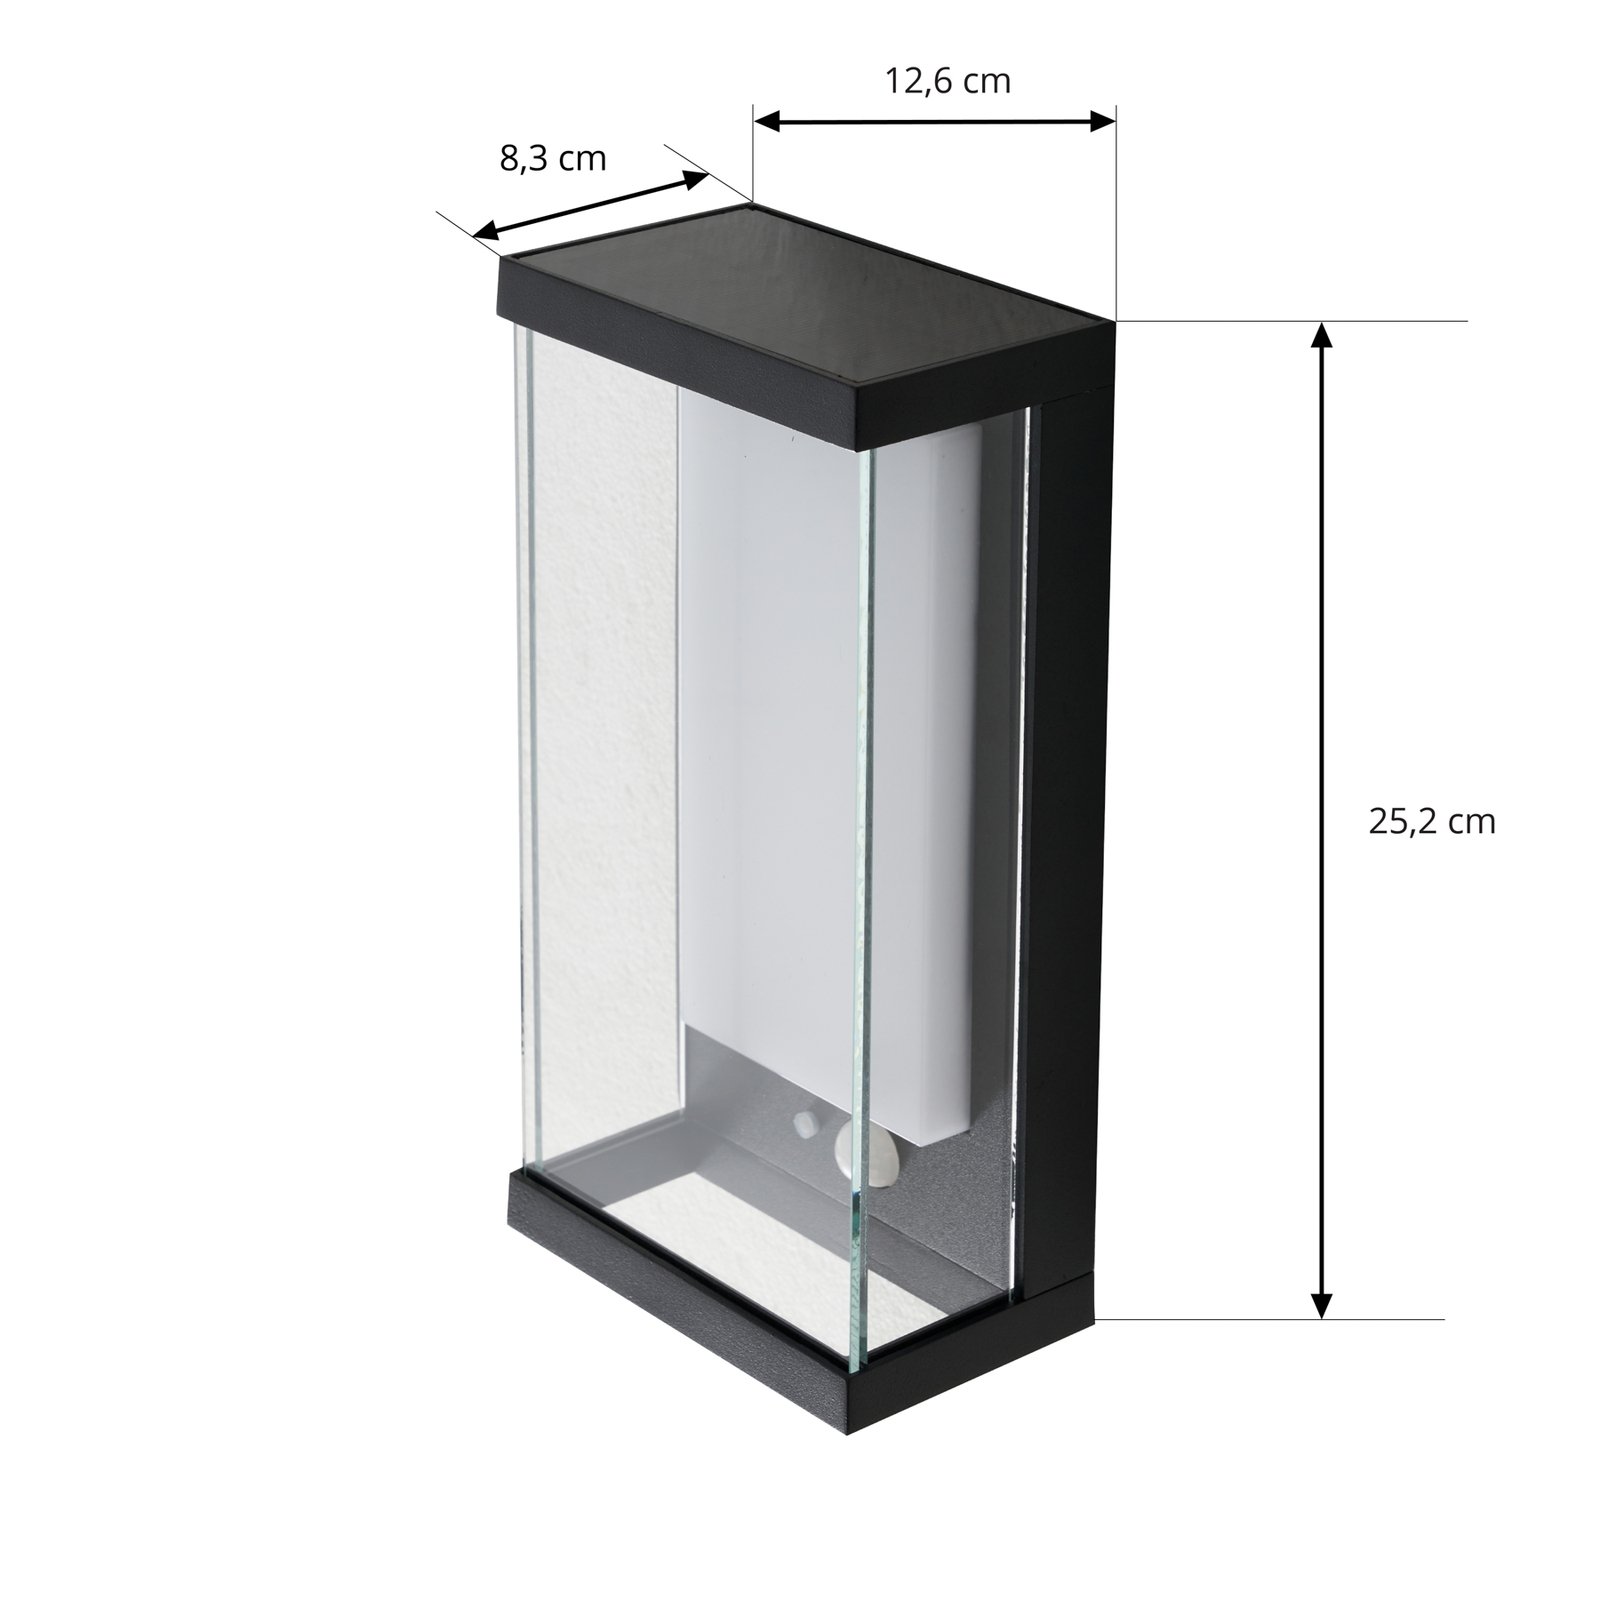 Lucande Dava LED solarna vanjska zidna svjetiljka, visina 25,2 cm, senzor